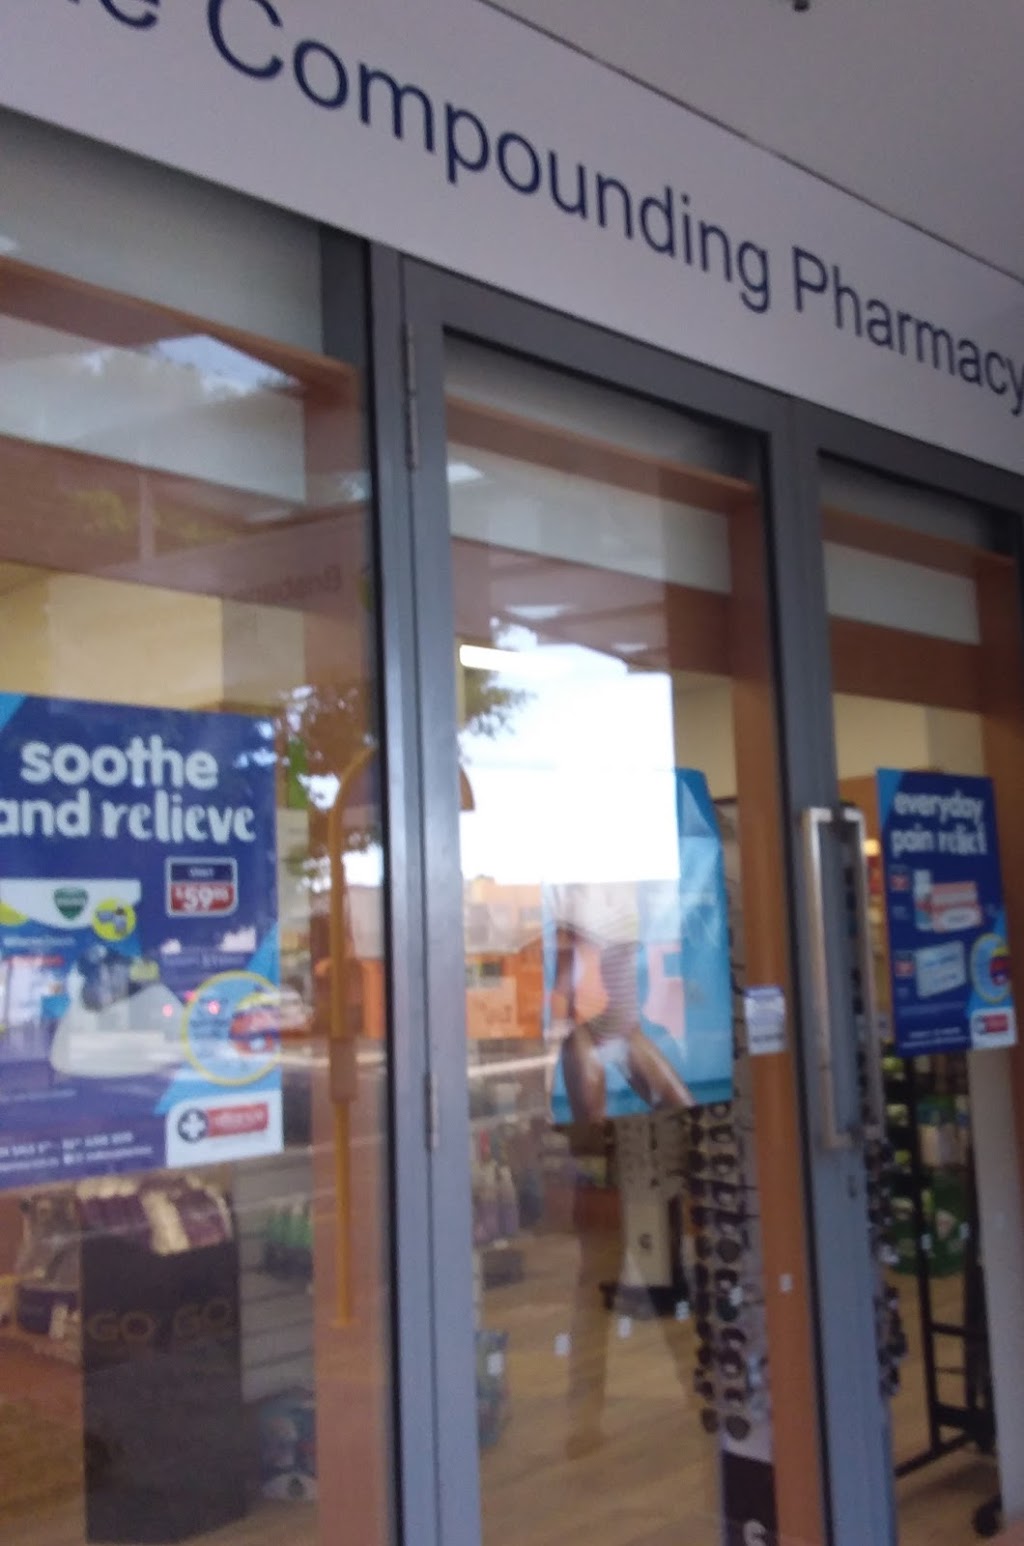 Brisbane Compounding Pharmacy | Shop 1002/16 Hamilton Pl, Bowen Hills QLD 4006, Australia | Phone: (07) 3160 1136